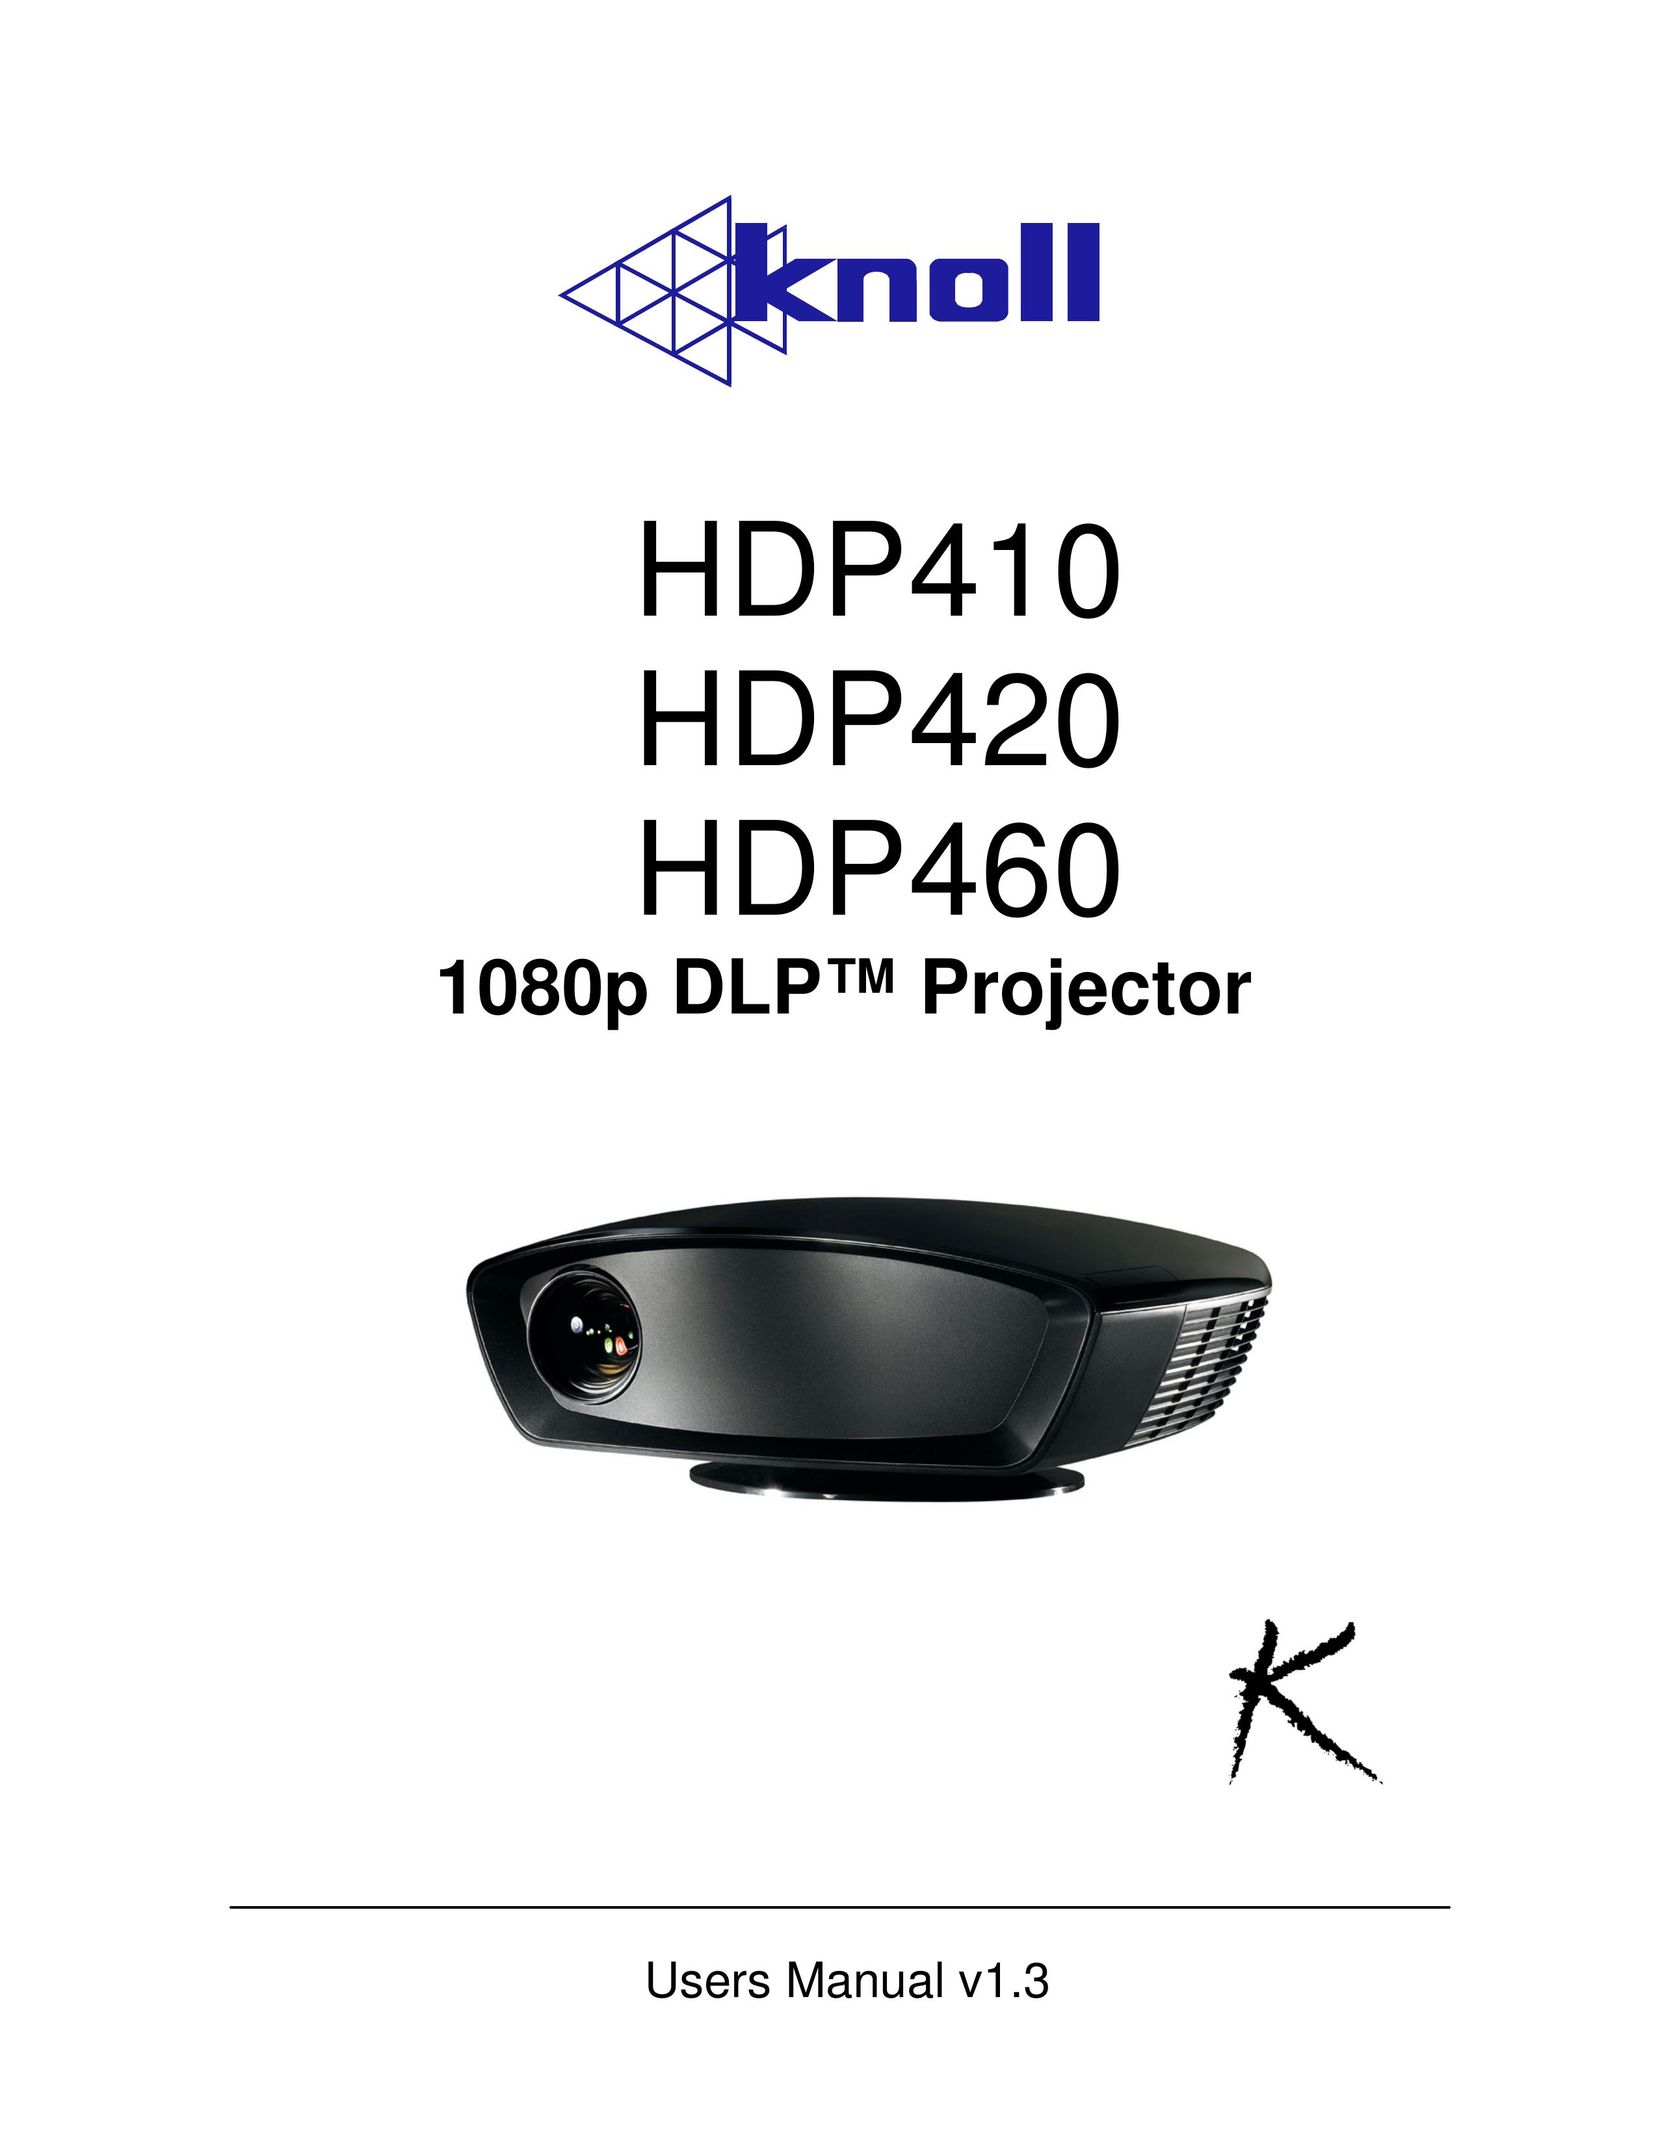 Knoll HDP460 Projector User Manual